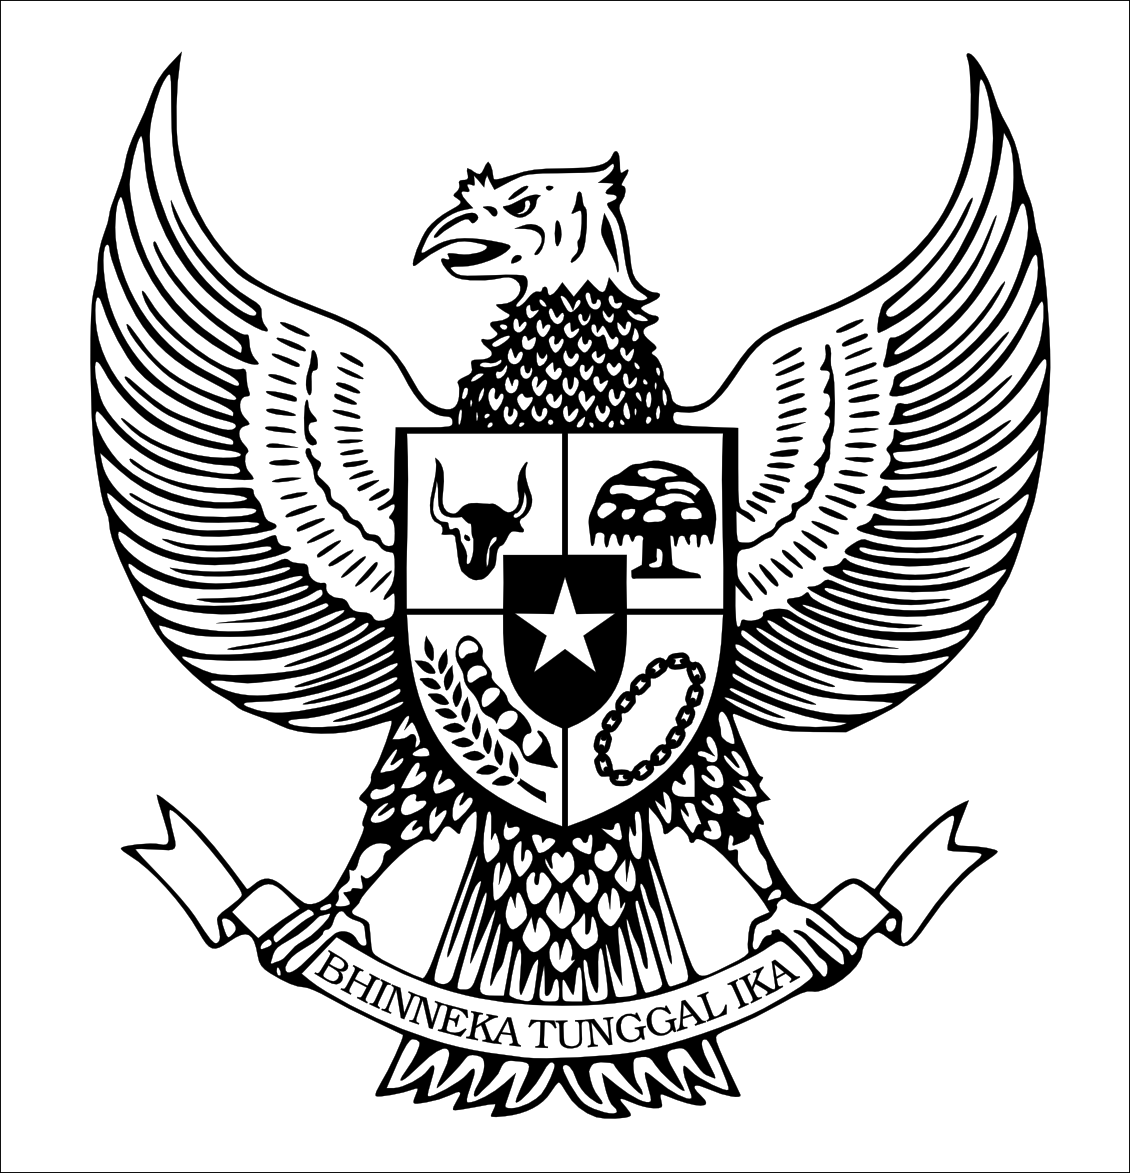 Logo Indonesia dan Dunia: LAMBANG BURUNG GARUDA - LOGO GARUDA PANCASILA